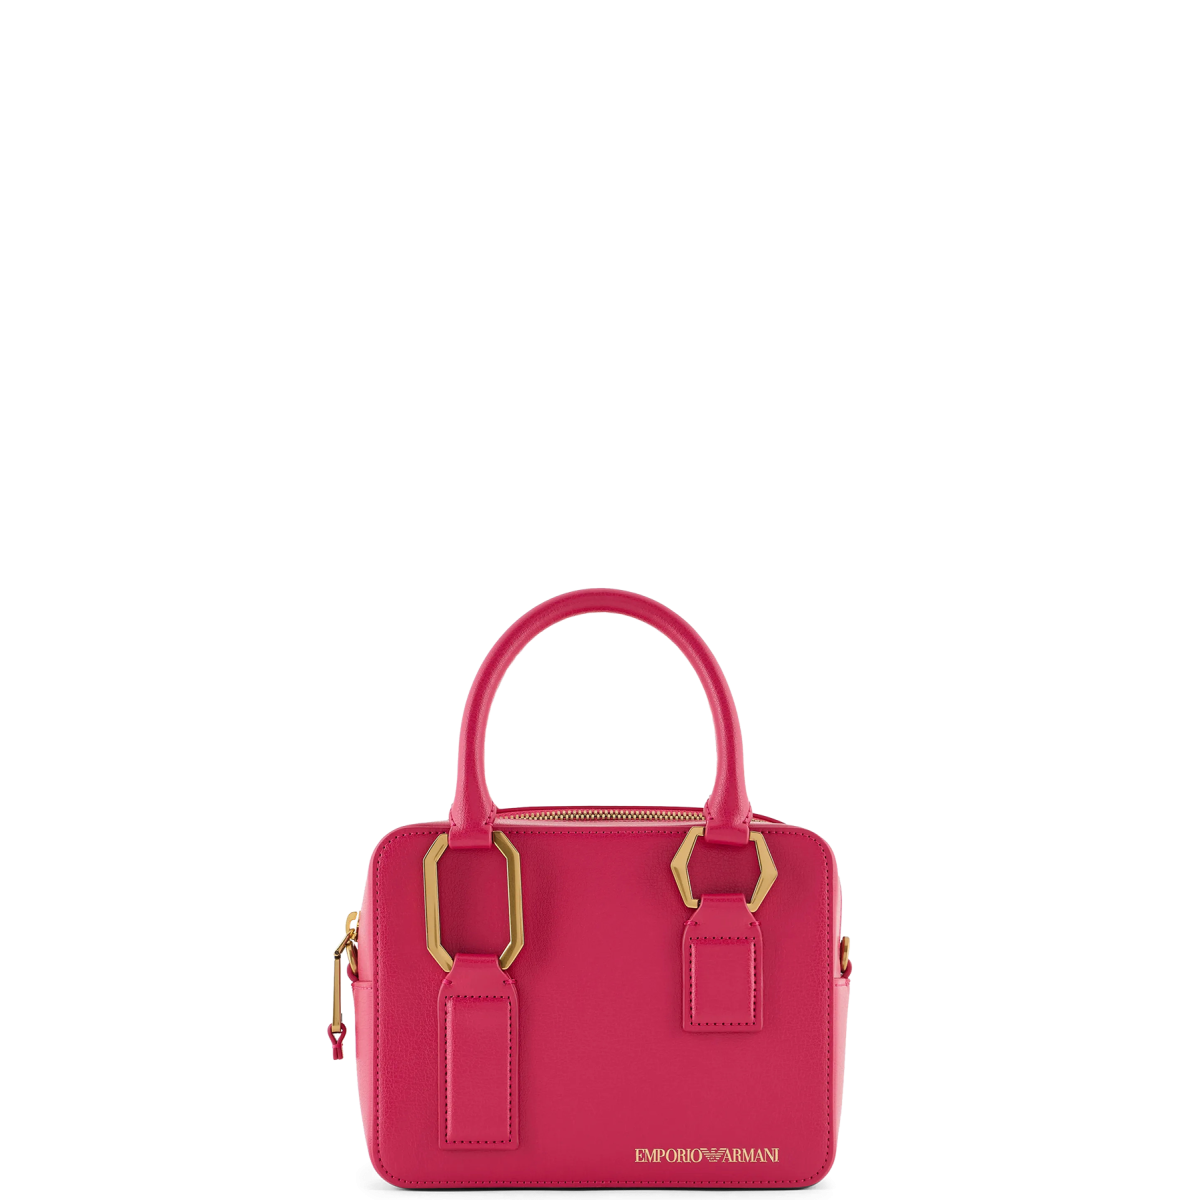 Emporio Armani | Bags | Emporio Armani Bag Like New | Poshmark